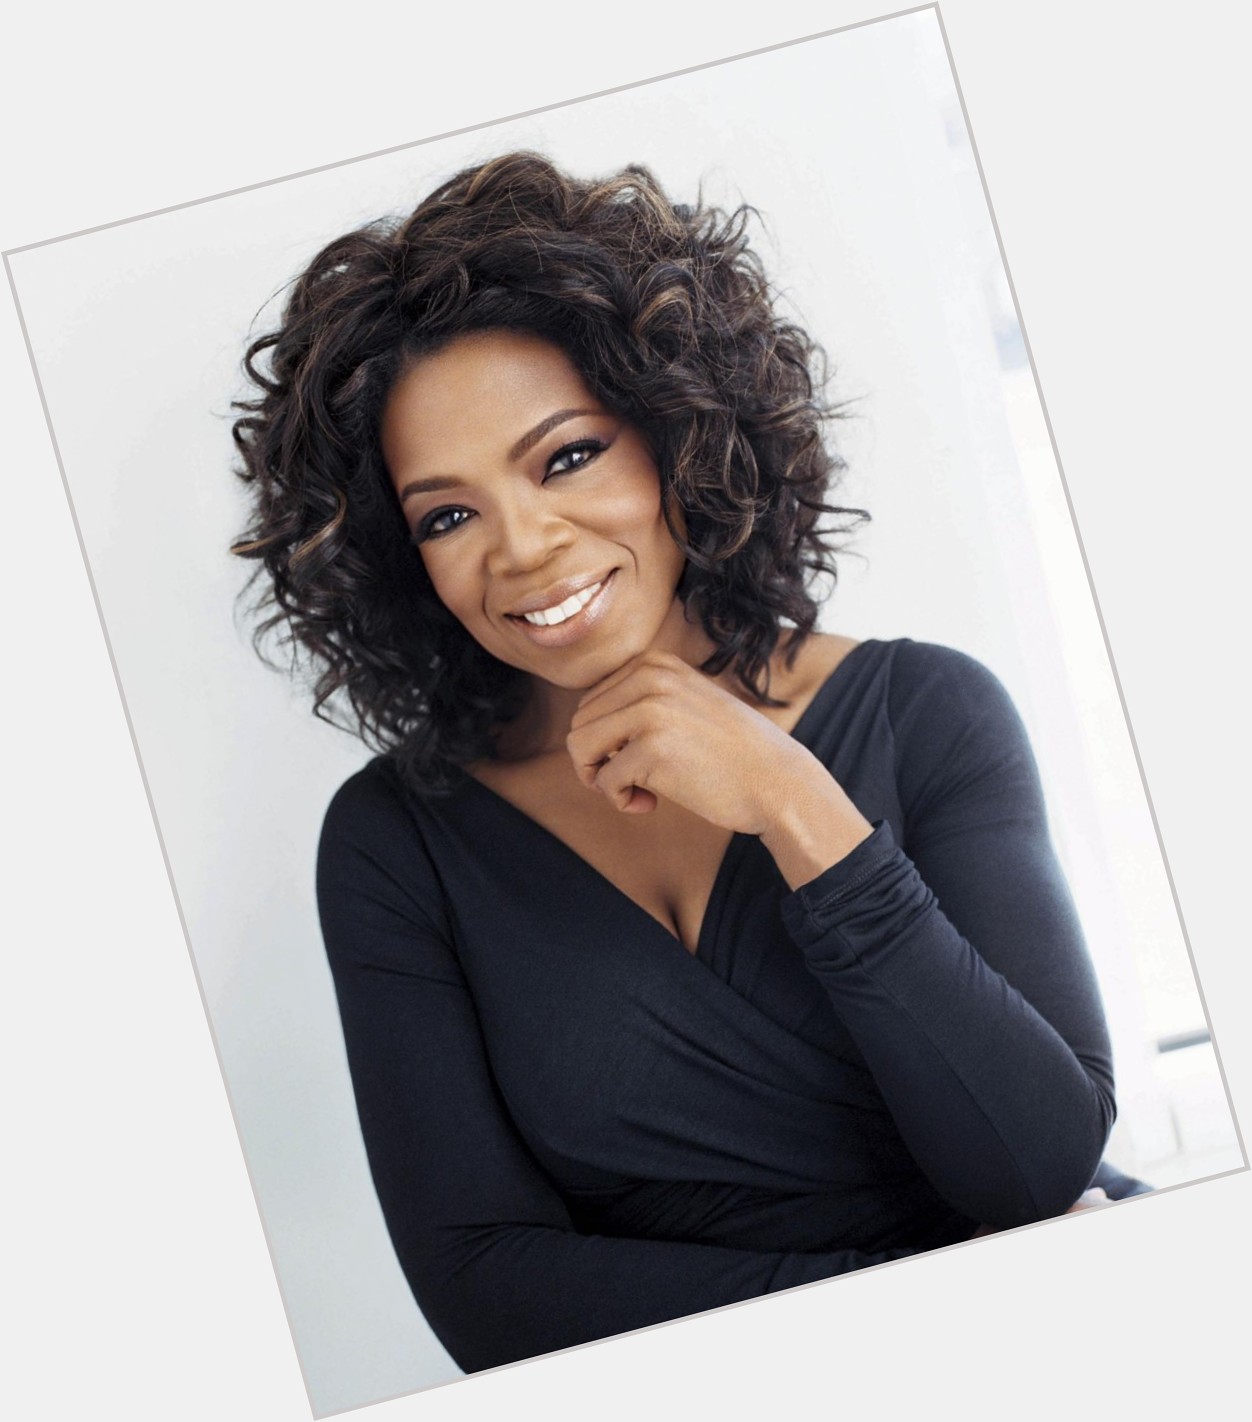 Happy 68th birthday to Oprah Winfrey! 